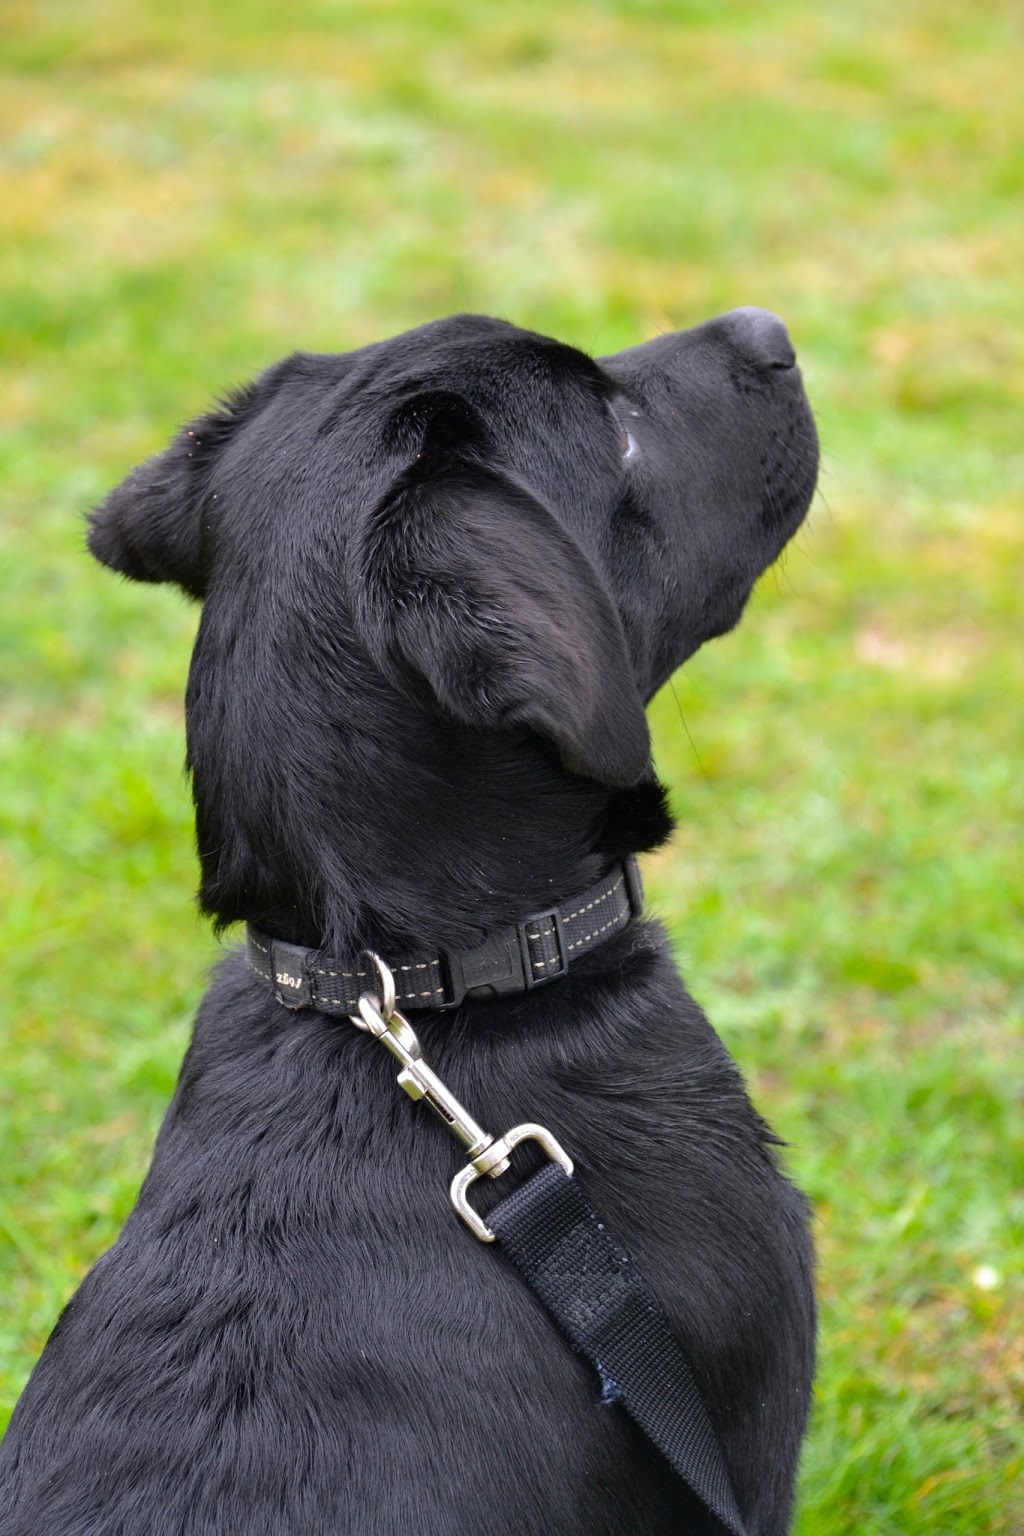 Brydie Charlesworth Dog Training | pet store | 22 South St, Wodonga VIC 3690, Australia | 0260245073 OR +61 2 6024 5073